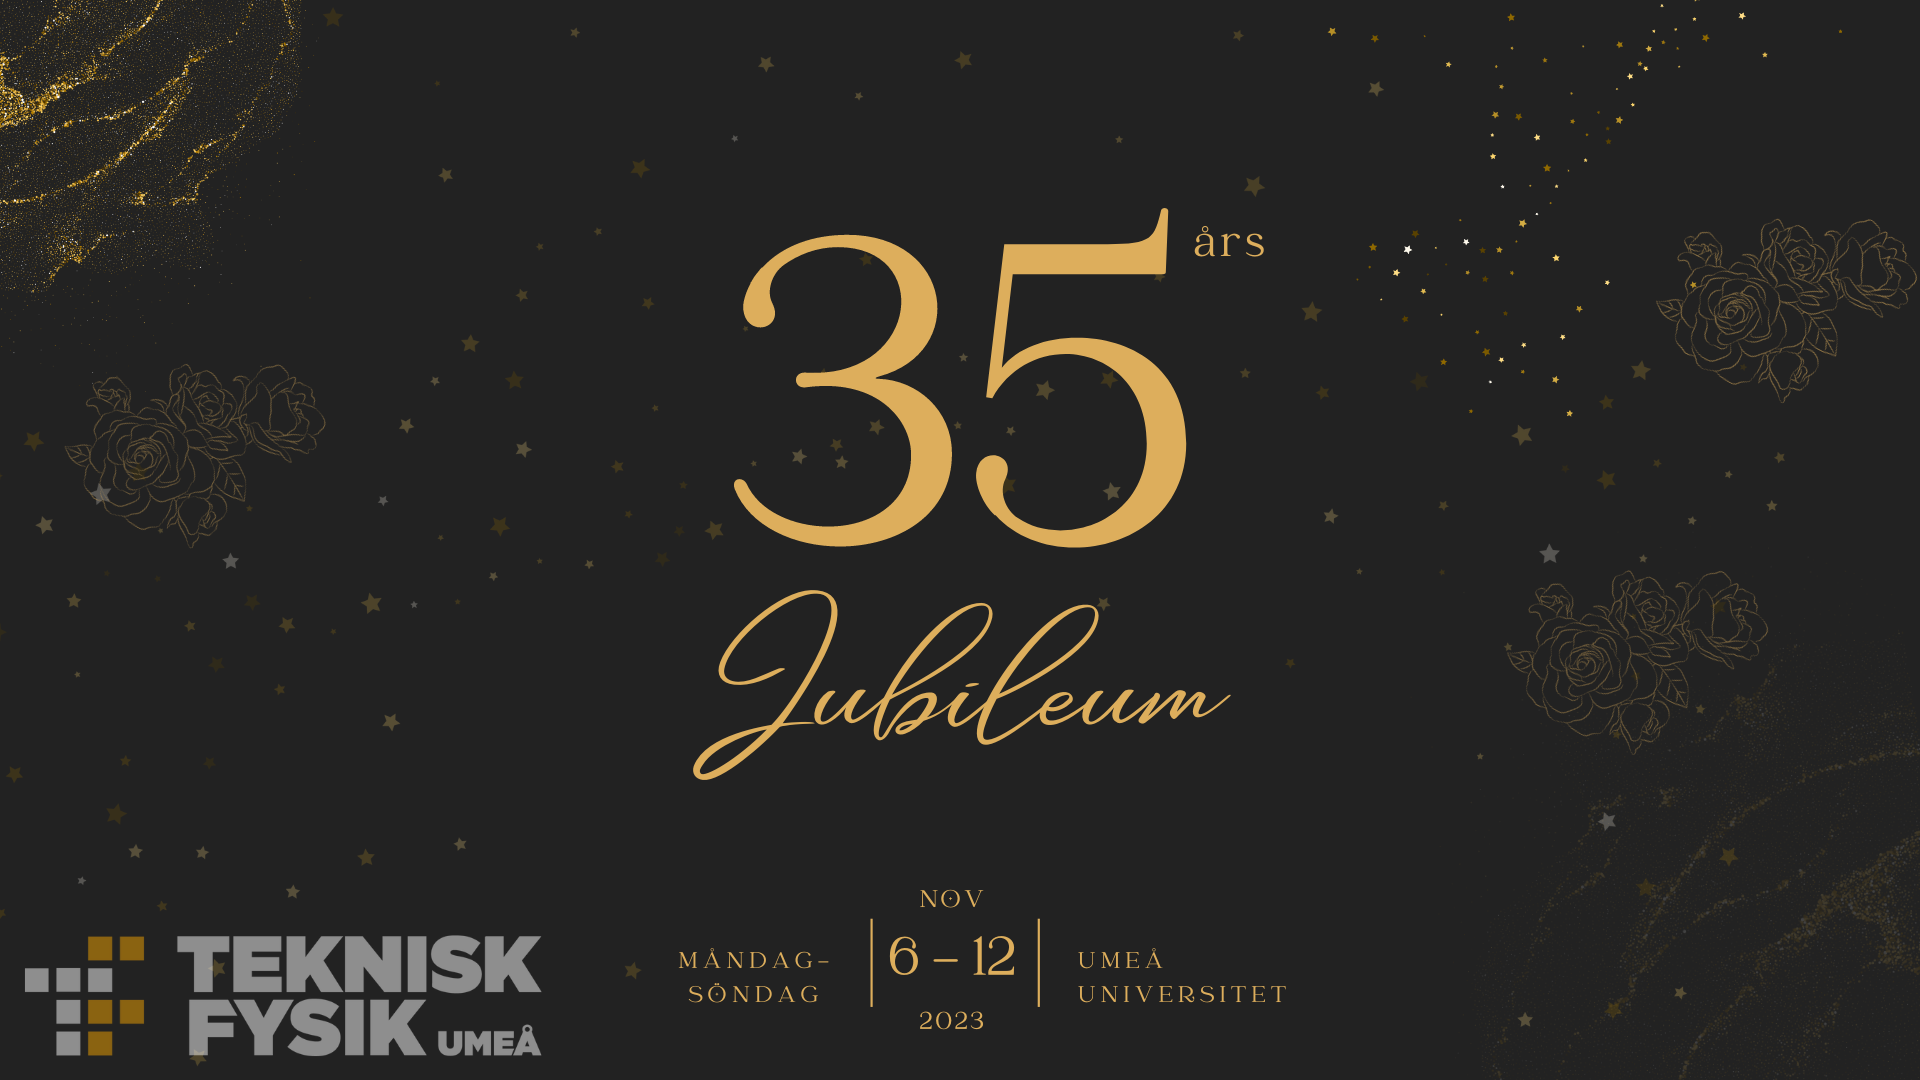 35 års jubileum